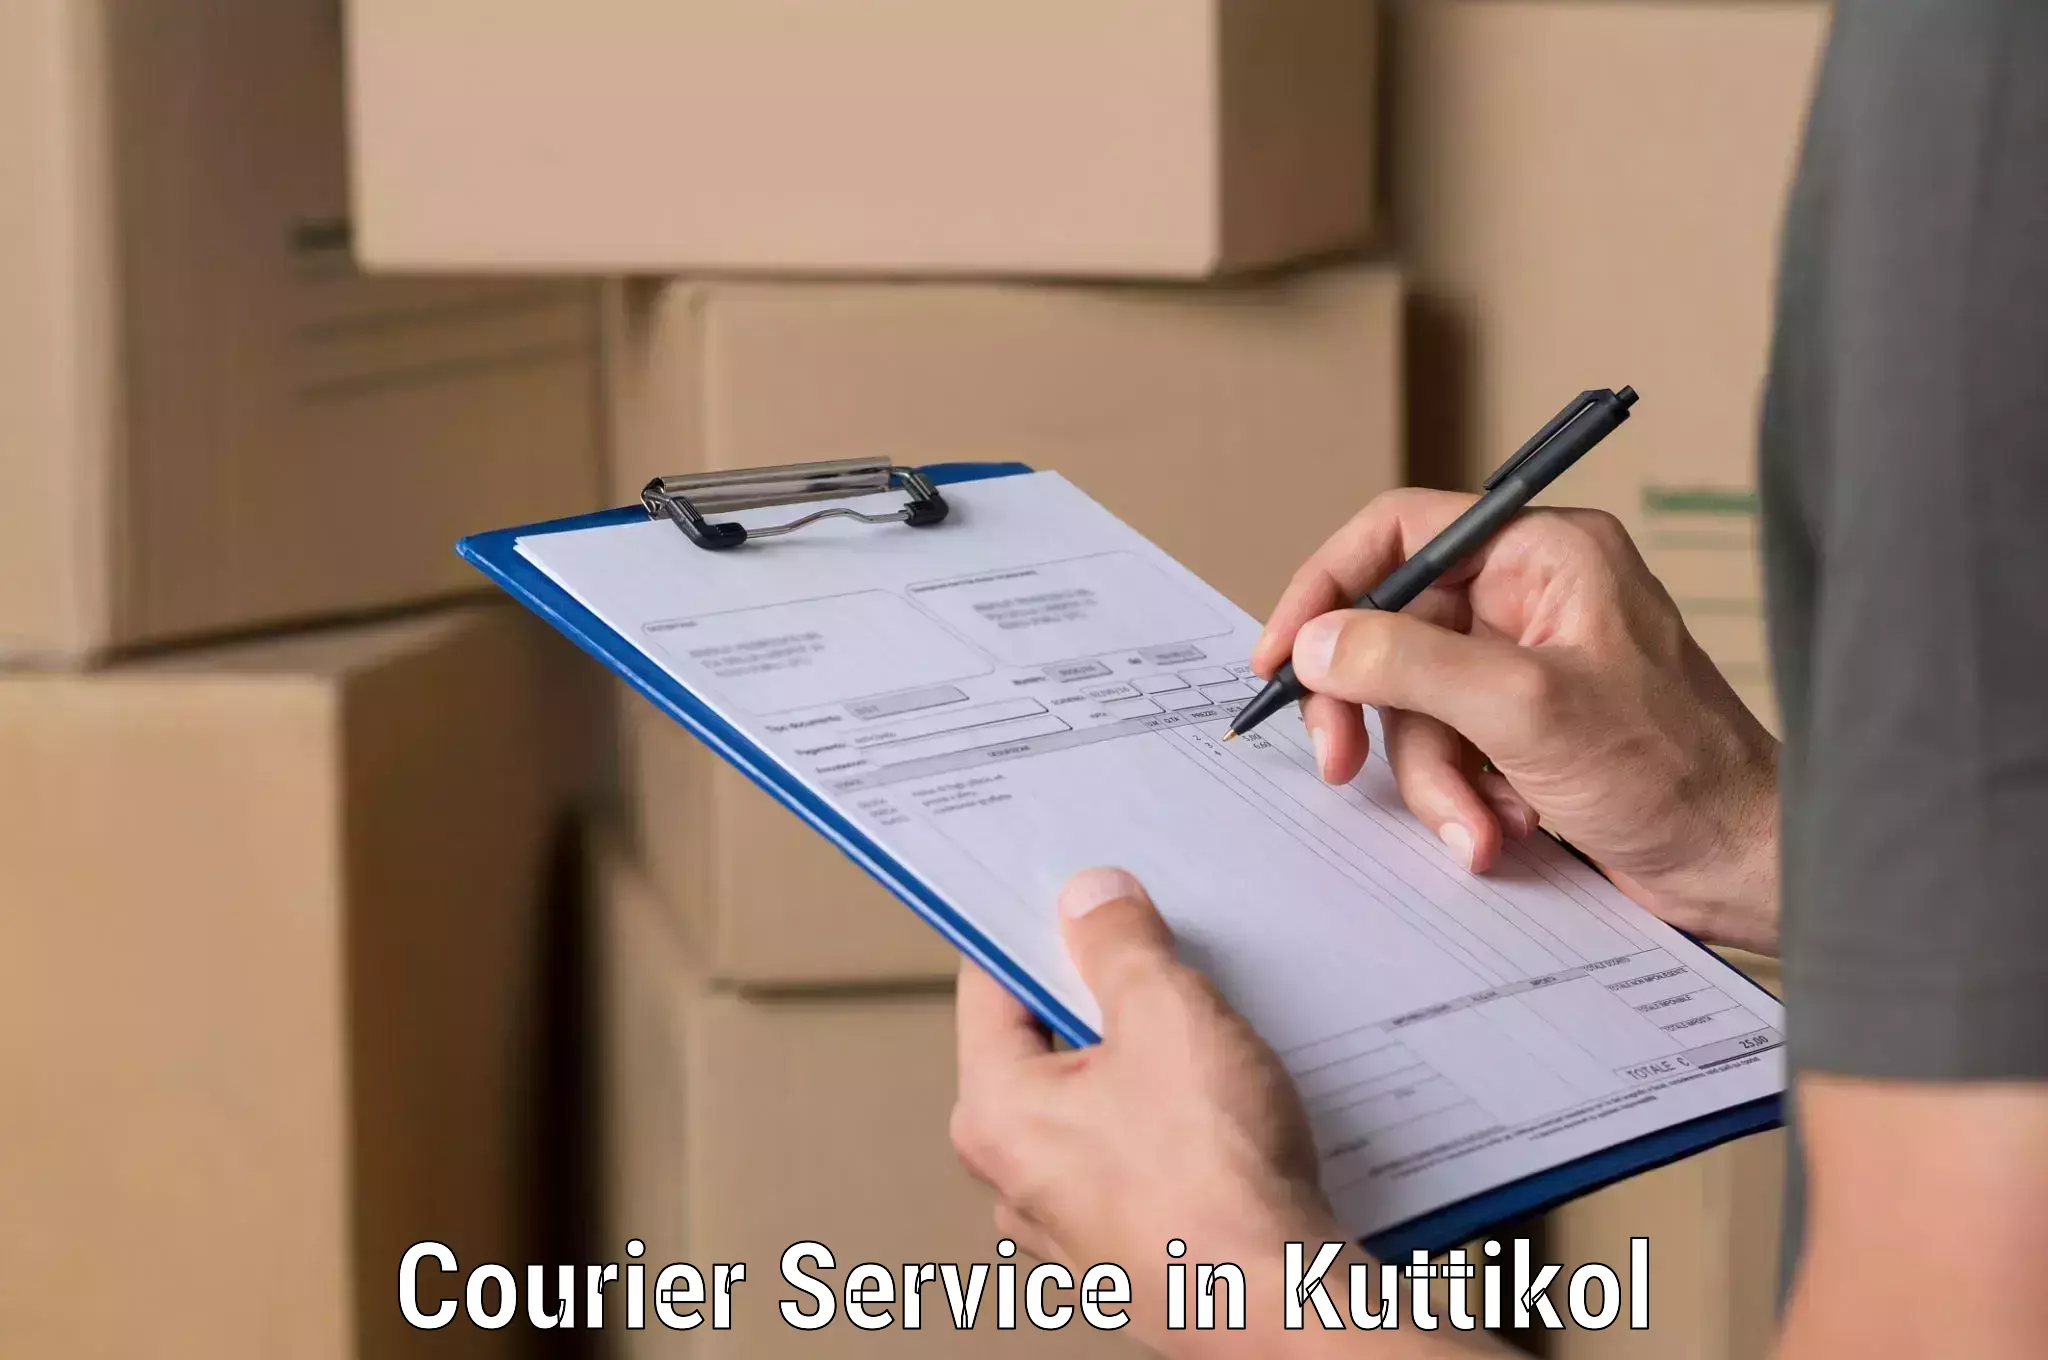 Efficient parcel delivery in Kuttikol